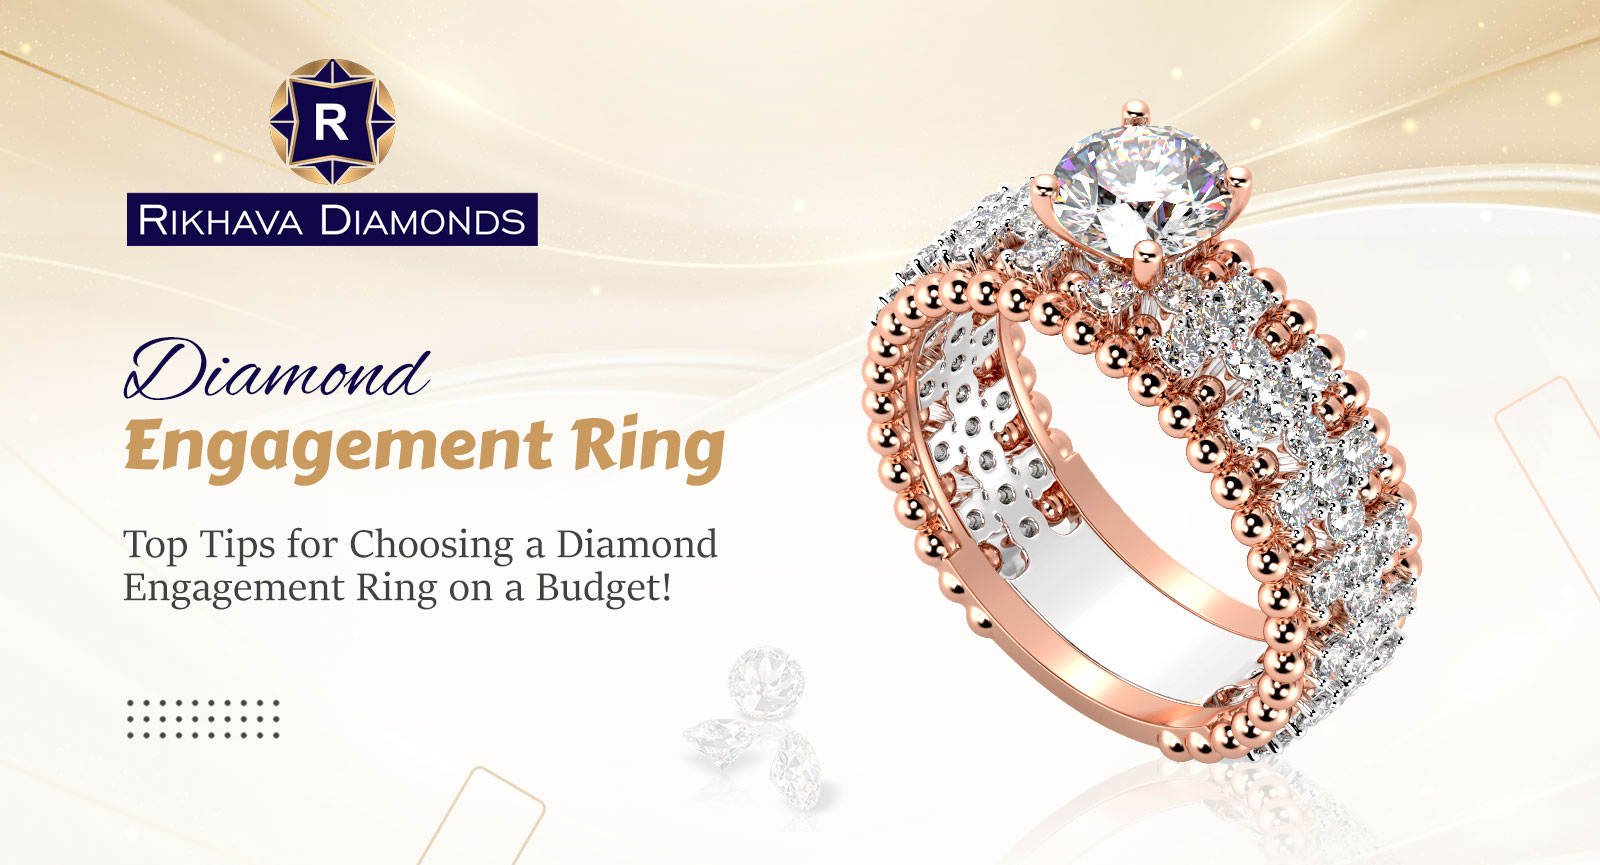 Diamond Engagement Ring, Rikhava Diamonds